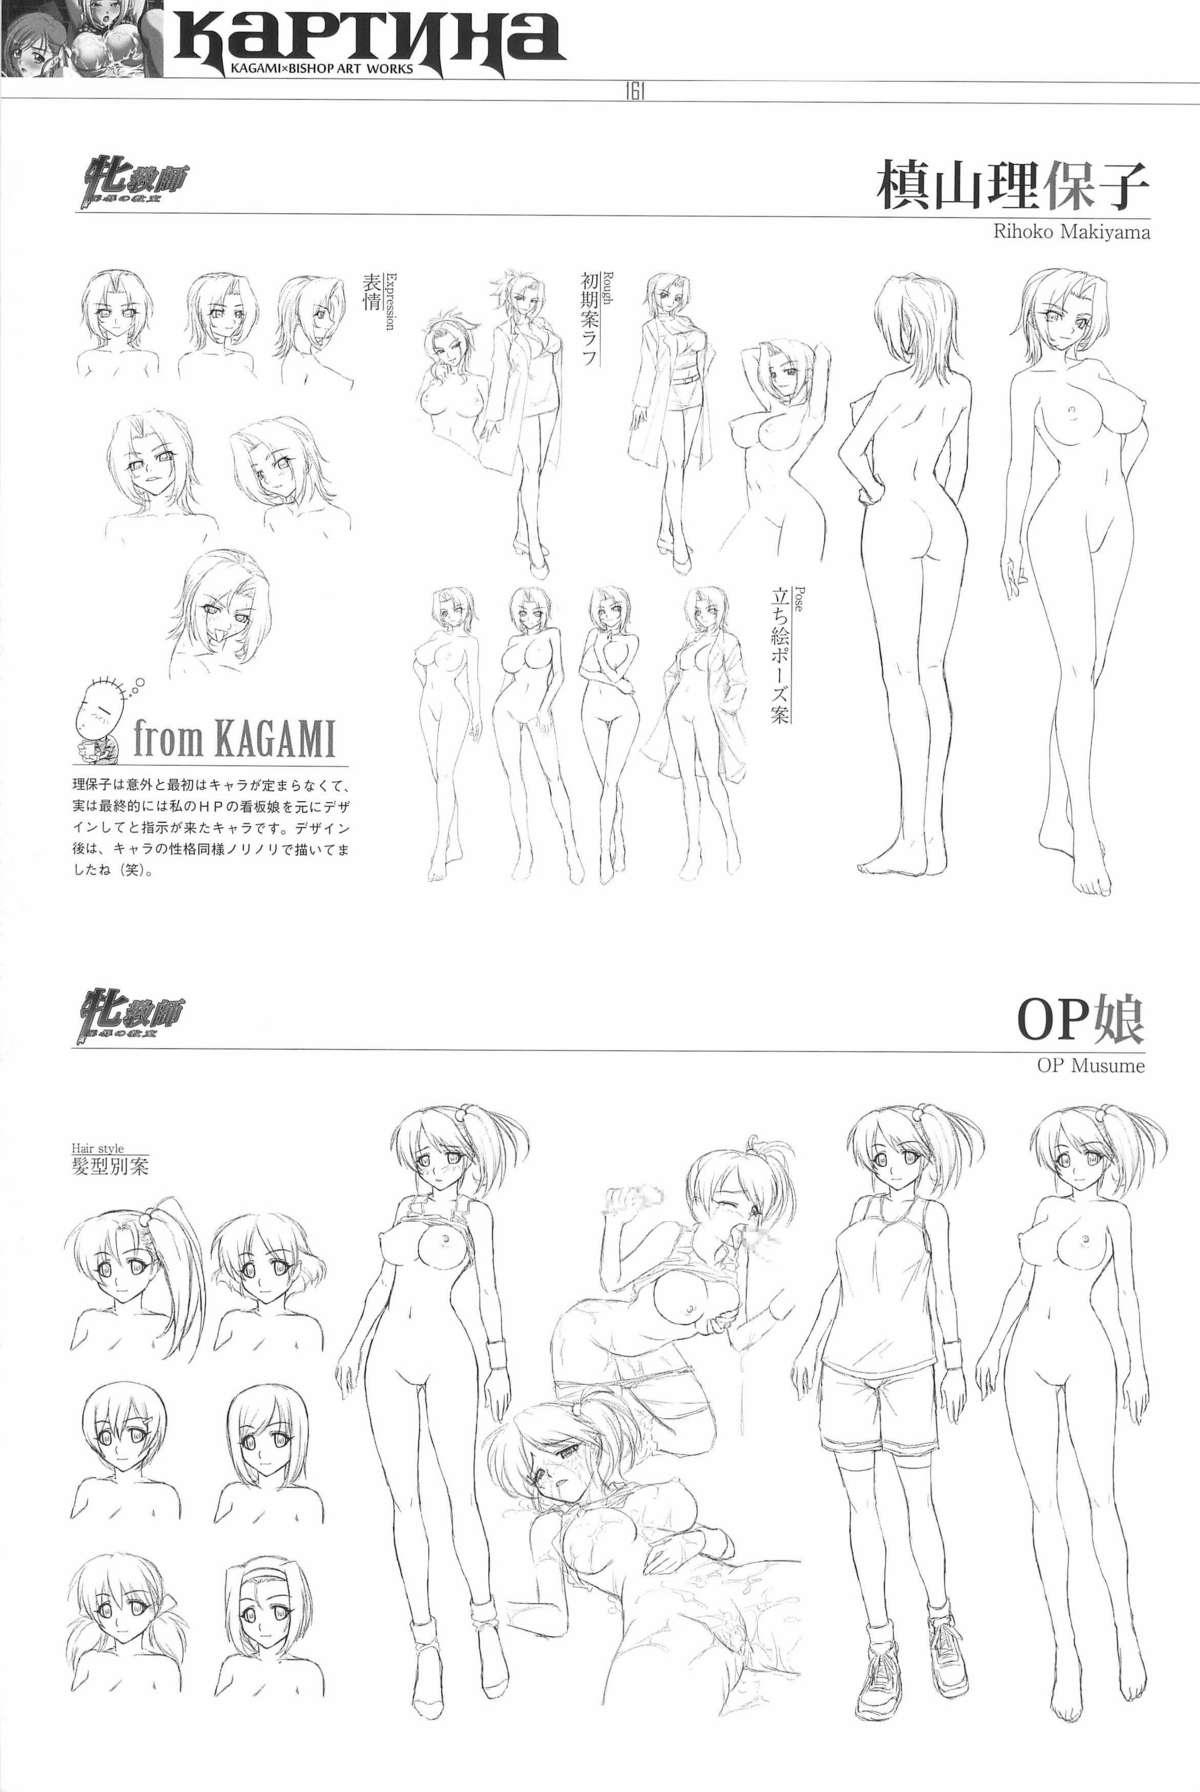 КАРТИНА Kagami X Bishop Art Works 252